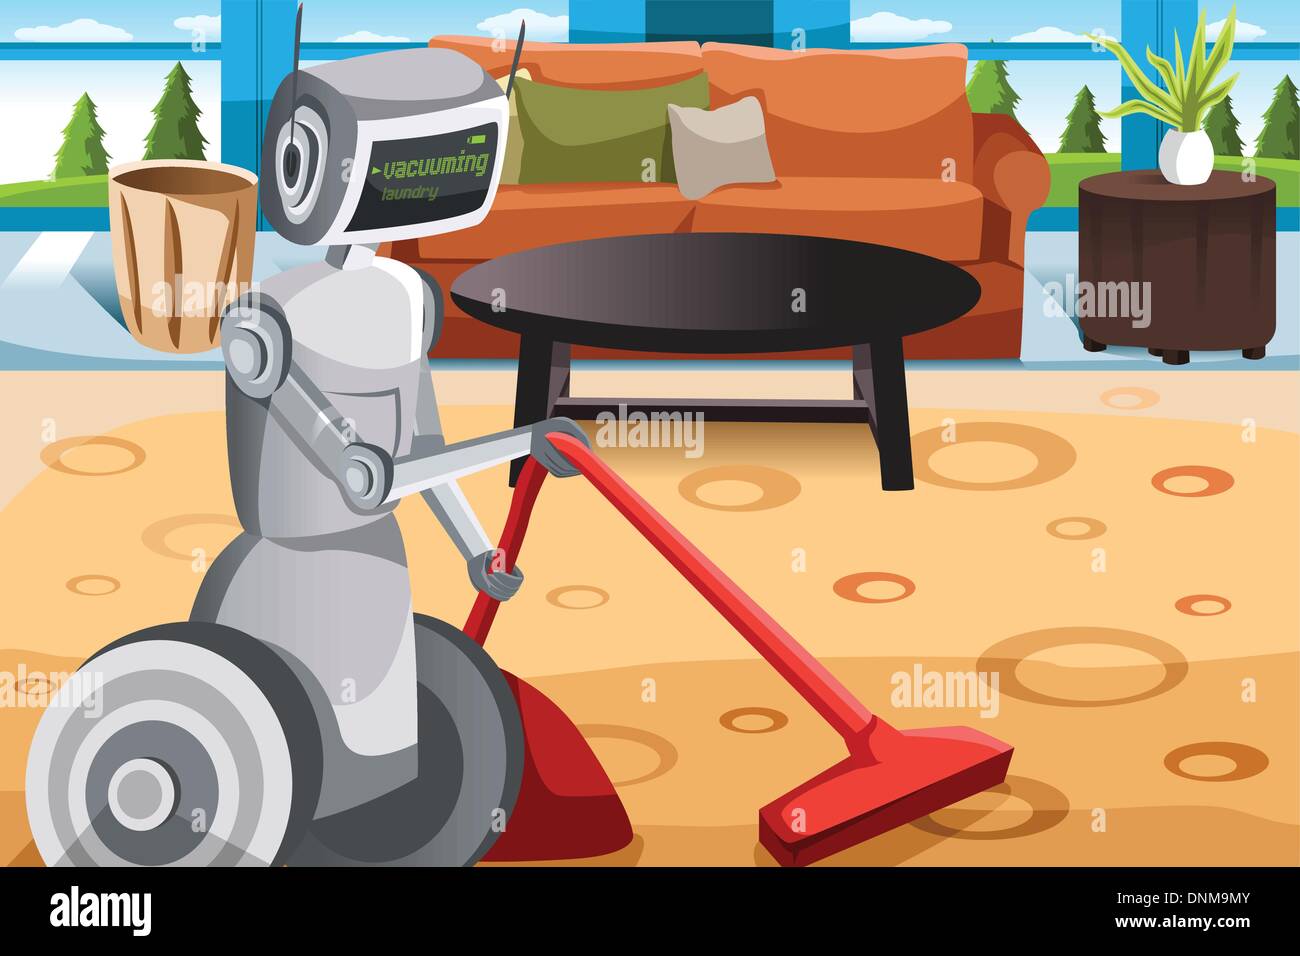 A vector illustration of a robot vacuuming carpet Stock Vector